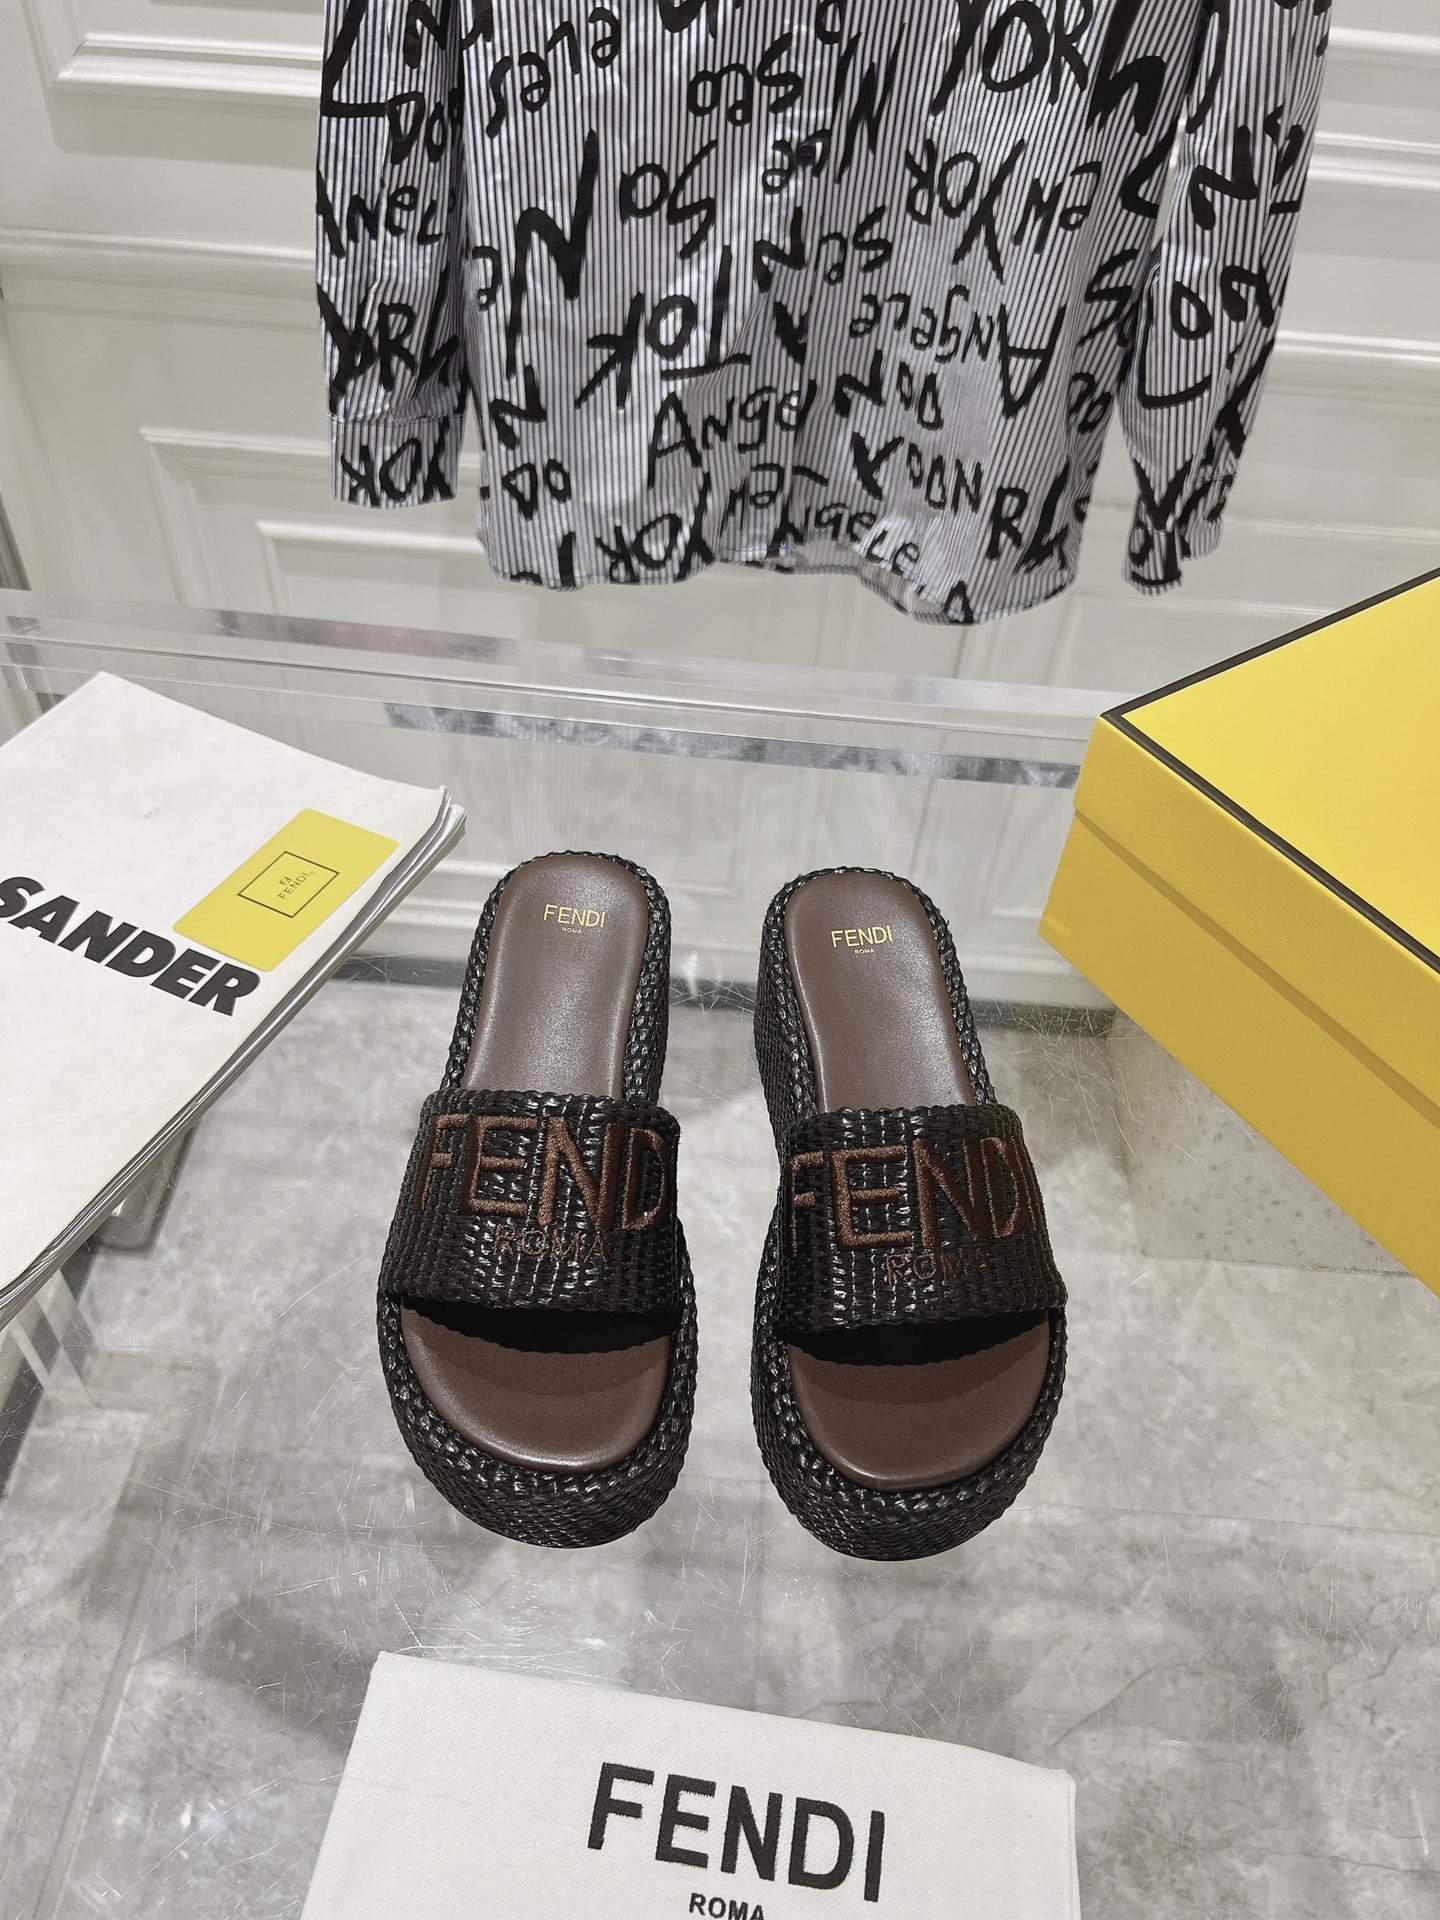 Fendi Shoes Slippers Weave Sheepskin Fashion